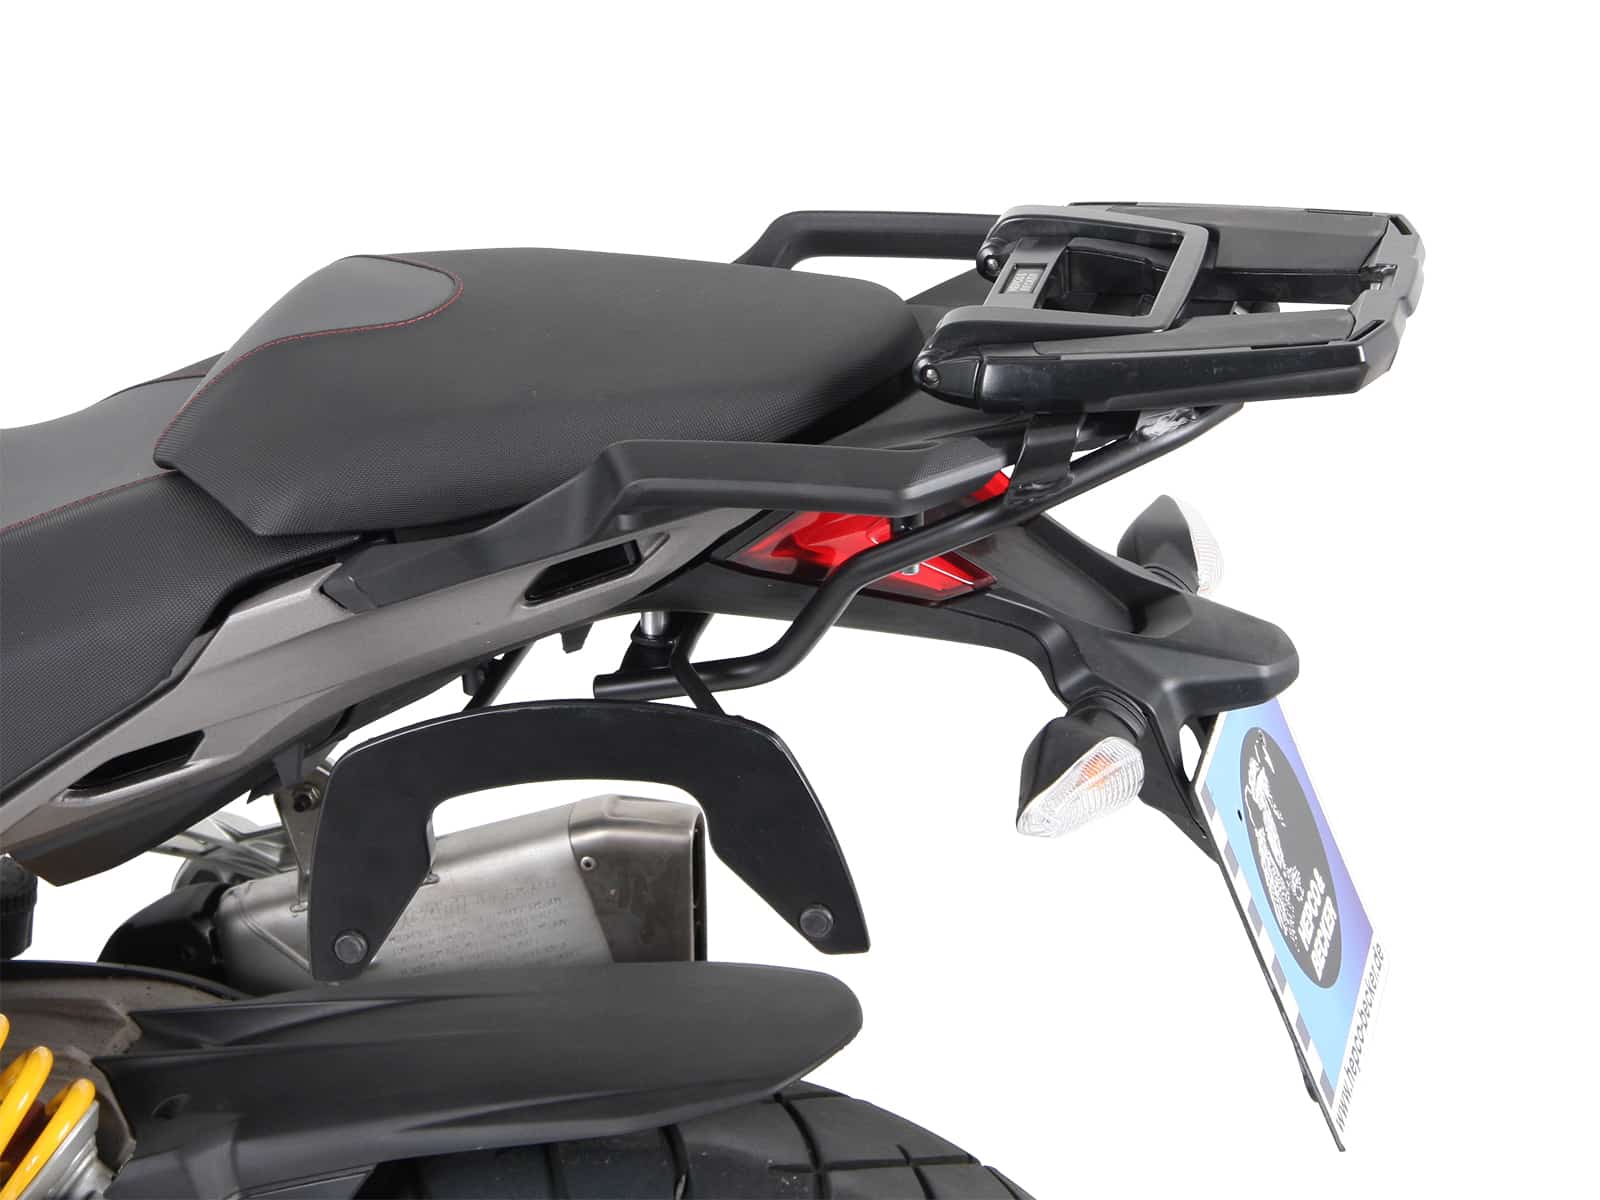 C-Bow sidecarrier for Ducati Multistrada 1200 Enduro (2016-2018)